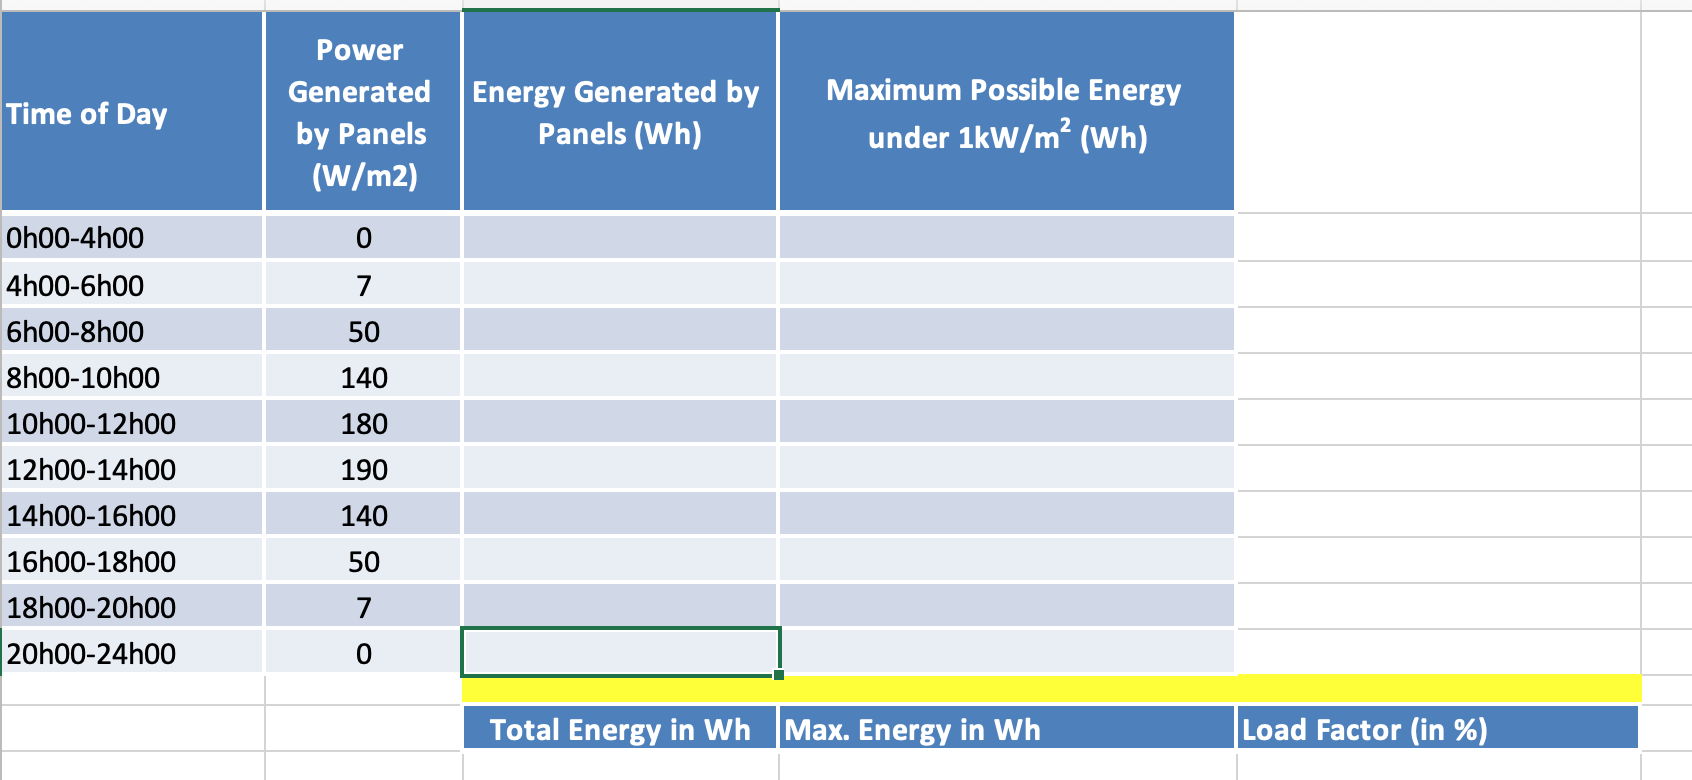 \begin{tabular}{|l|c|l|}
\hline & Power Generated by Panels (W/m2) & Energy Generated by Panels (Wh) \\
\hline Oh00-4h00 & 0